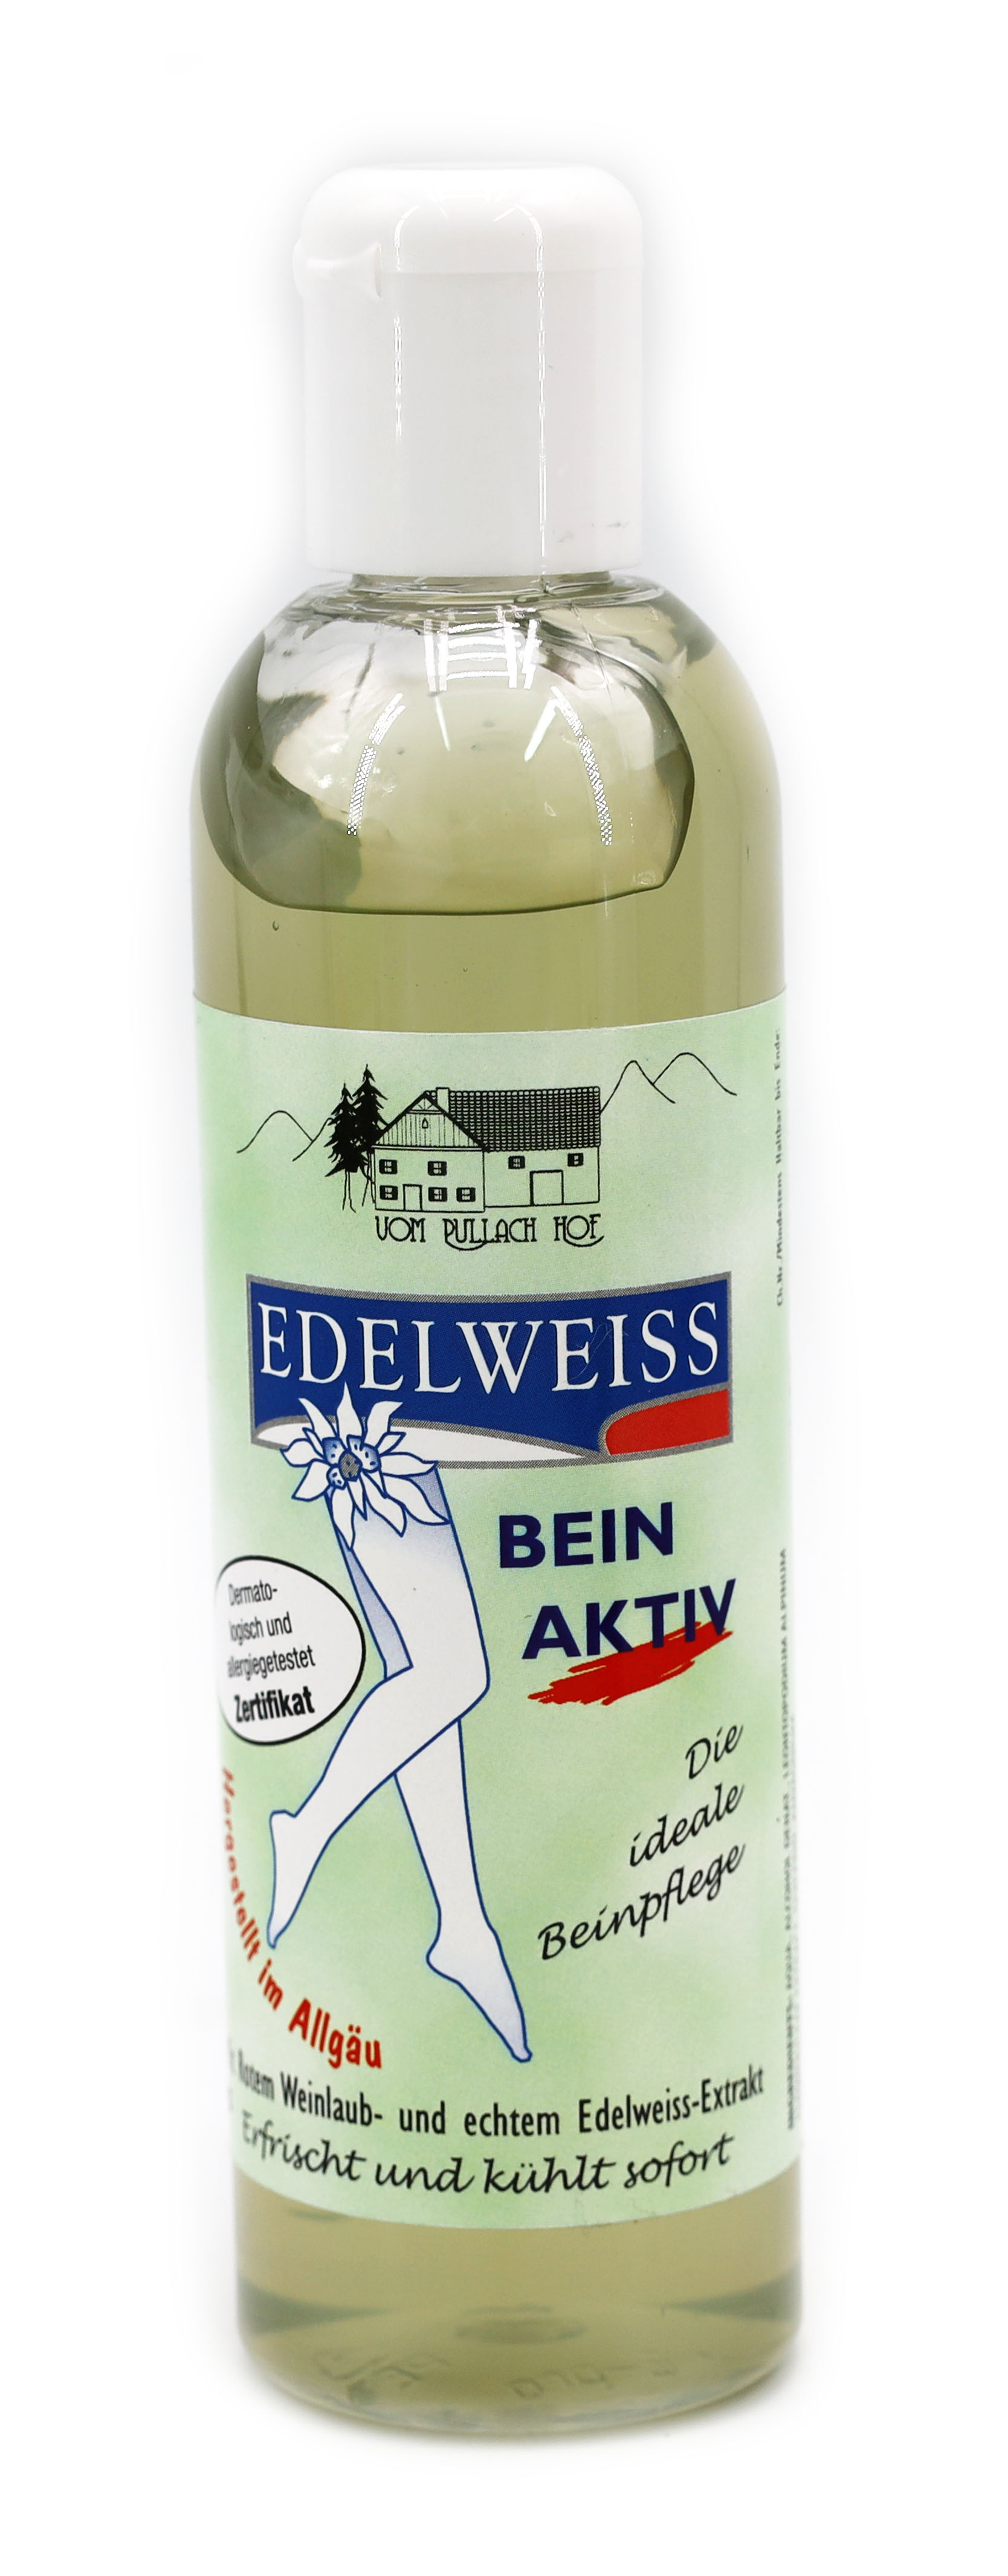 Edelweiss Bein Aktiv 250ml - Allgäu